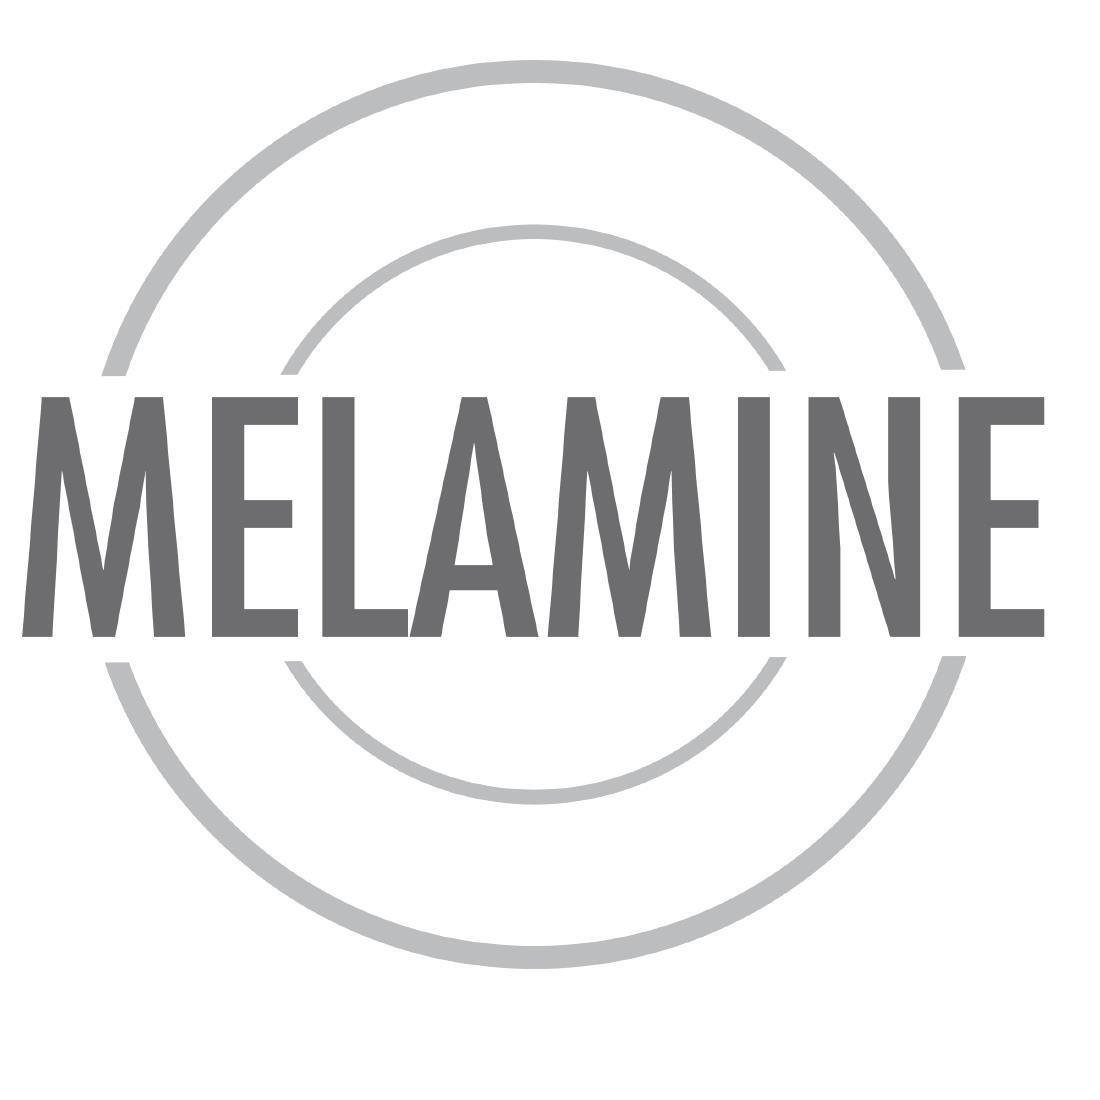 Olympia Kristallon Melamine Fluted Ramekins 57mm (Pack of 12) - T844  - 2